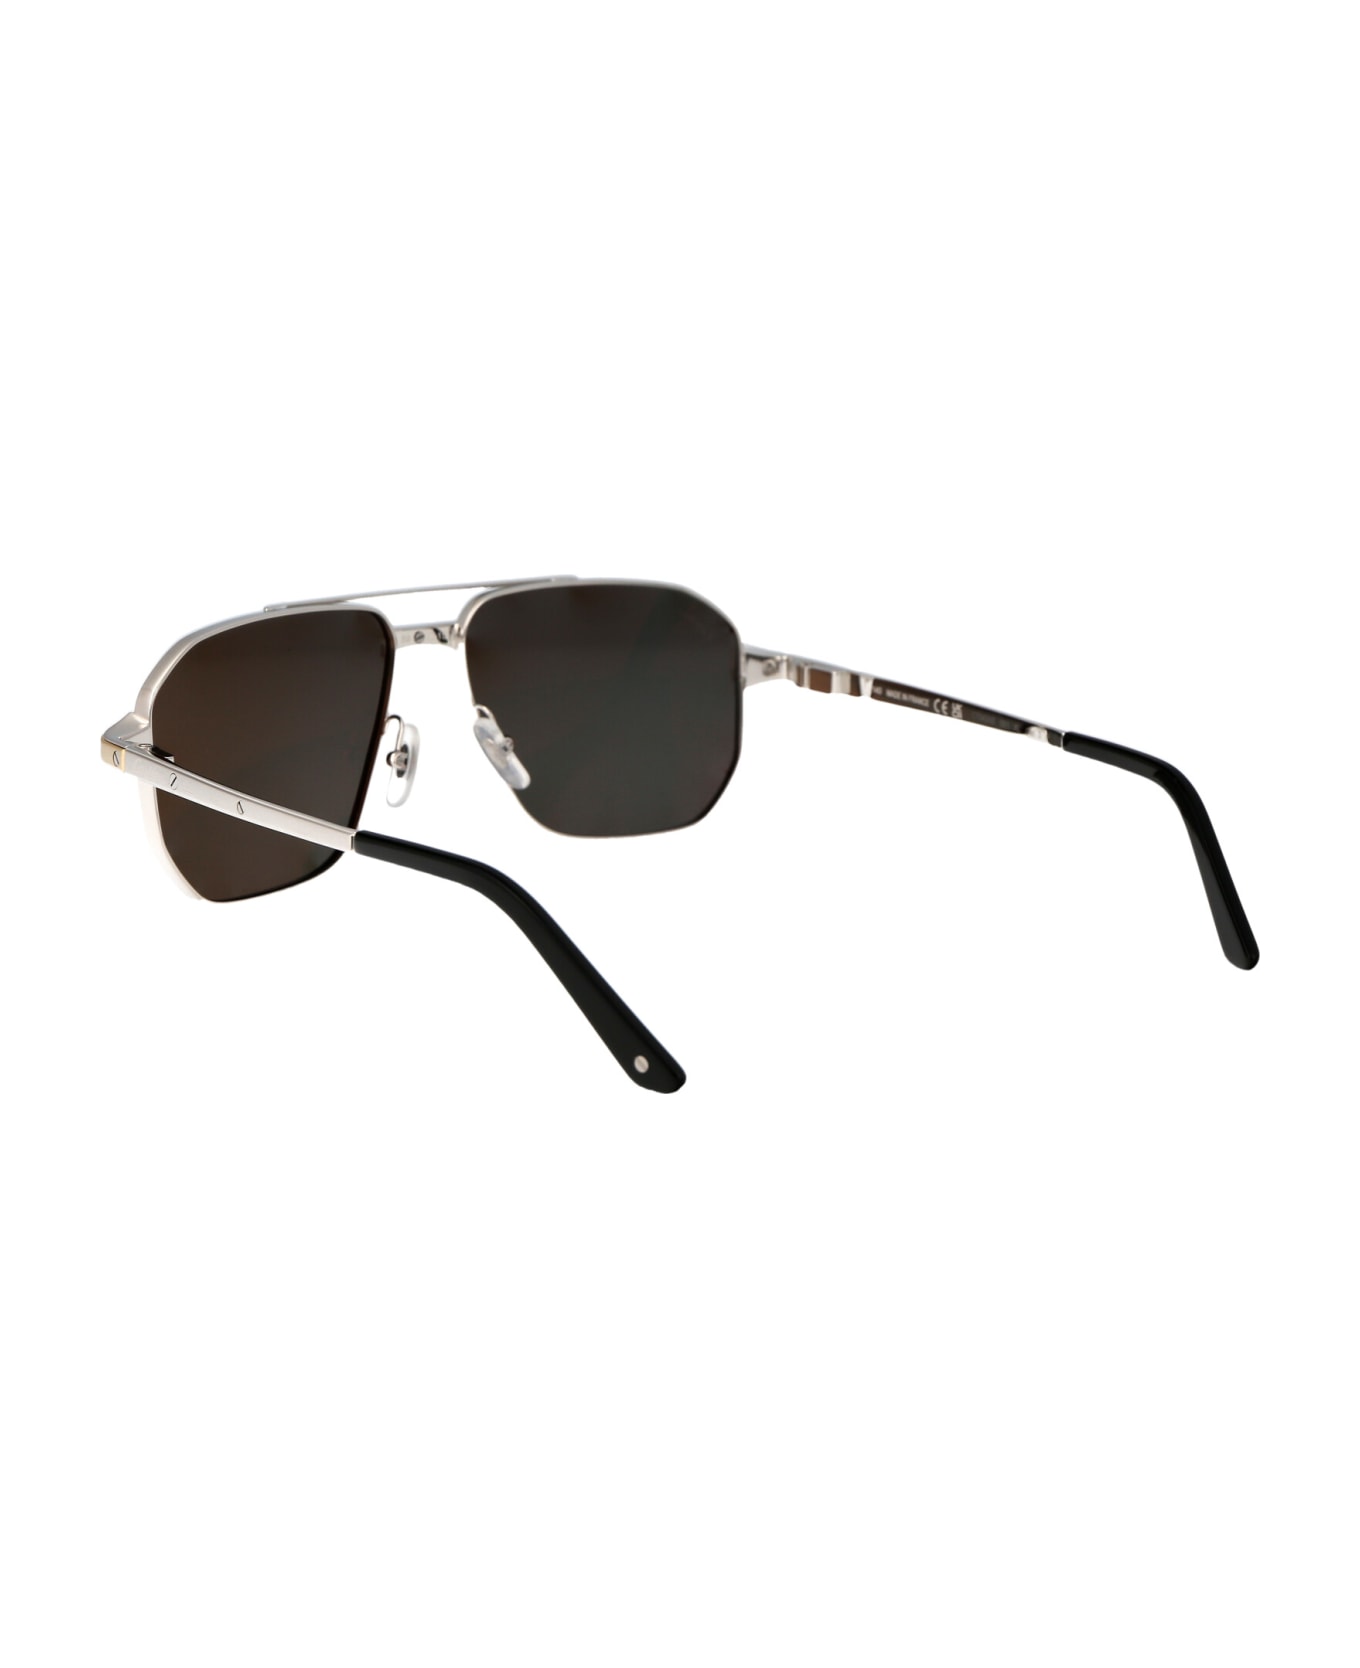 Cartier Eyewear Ct0424s Sunglasses - 001 SILVER SILVER SMOKE